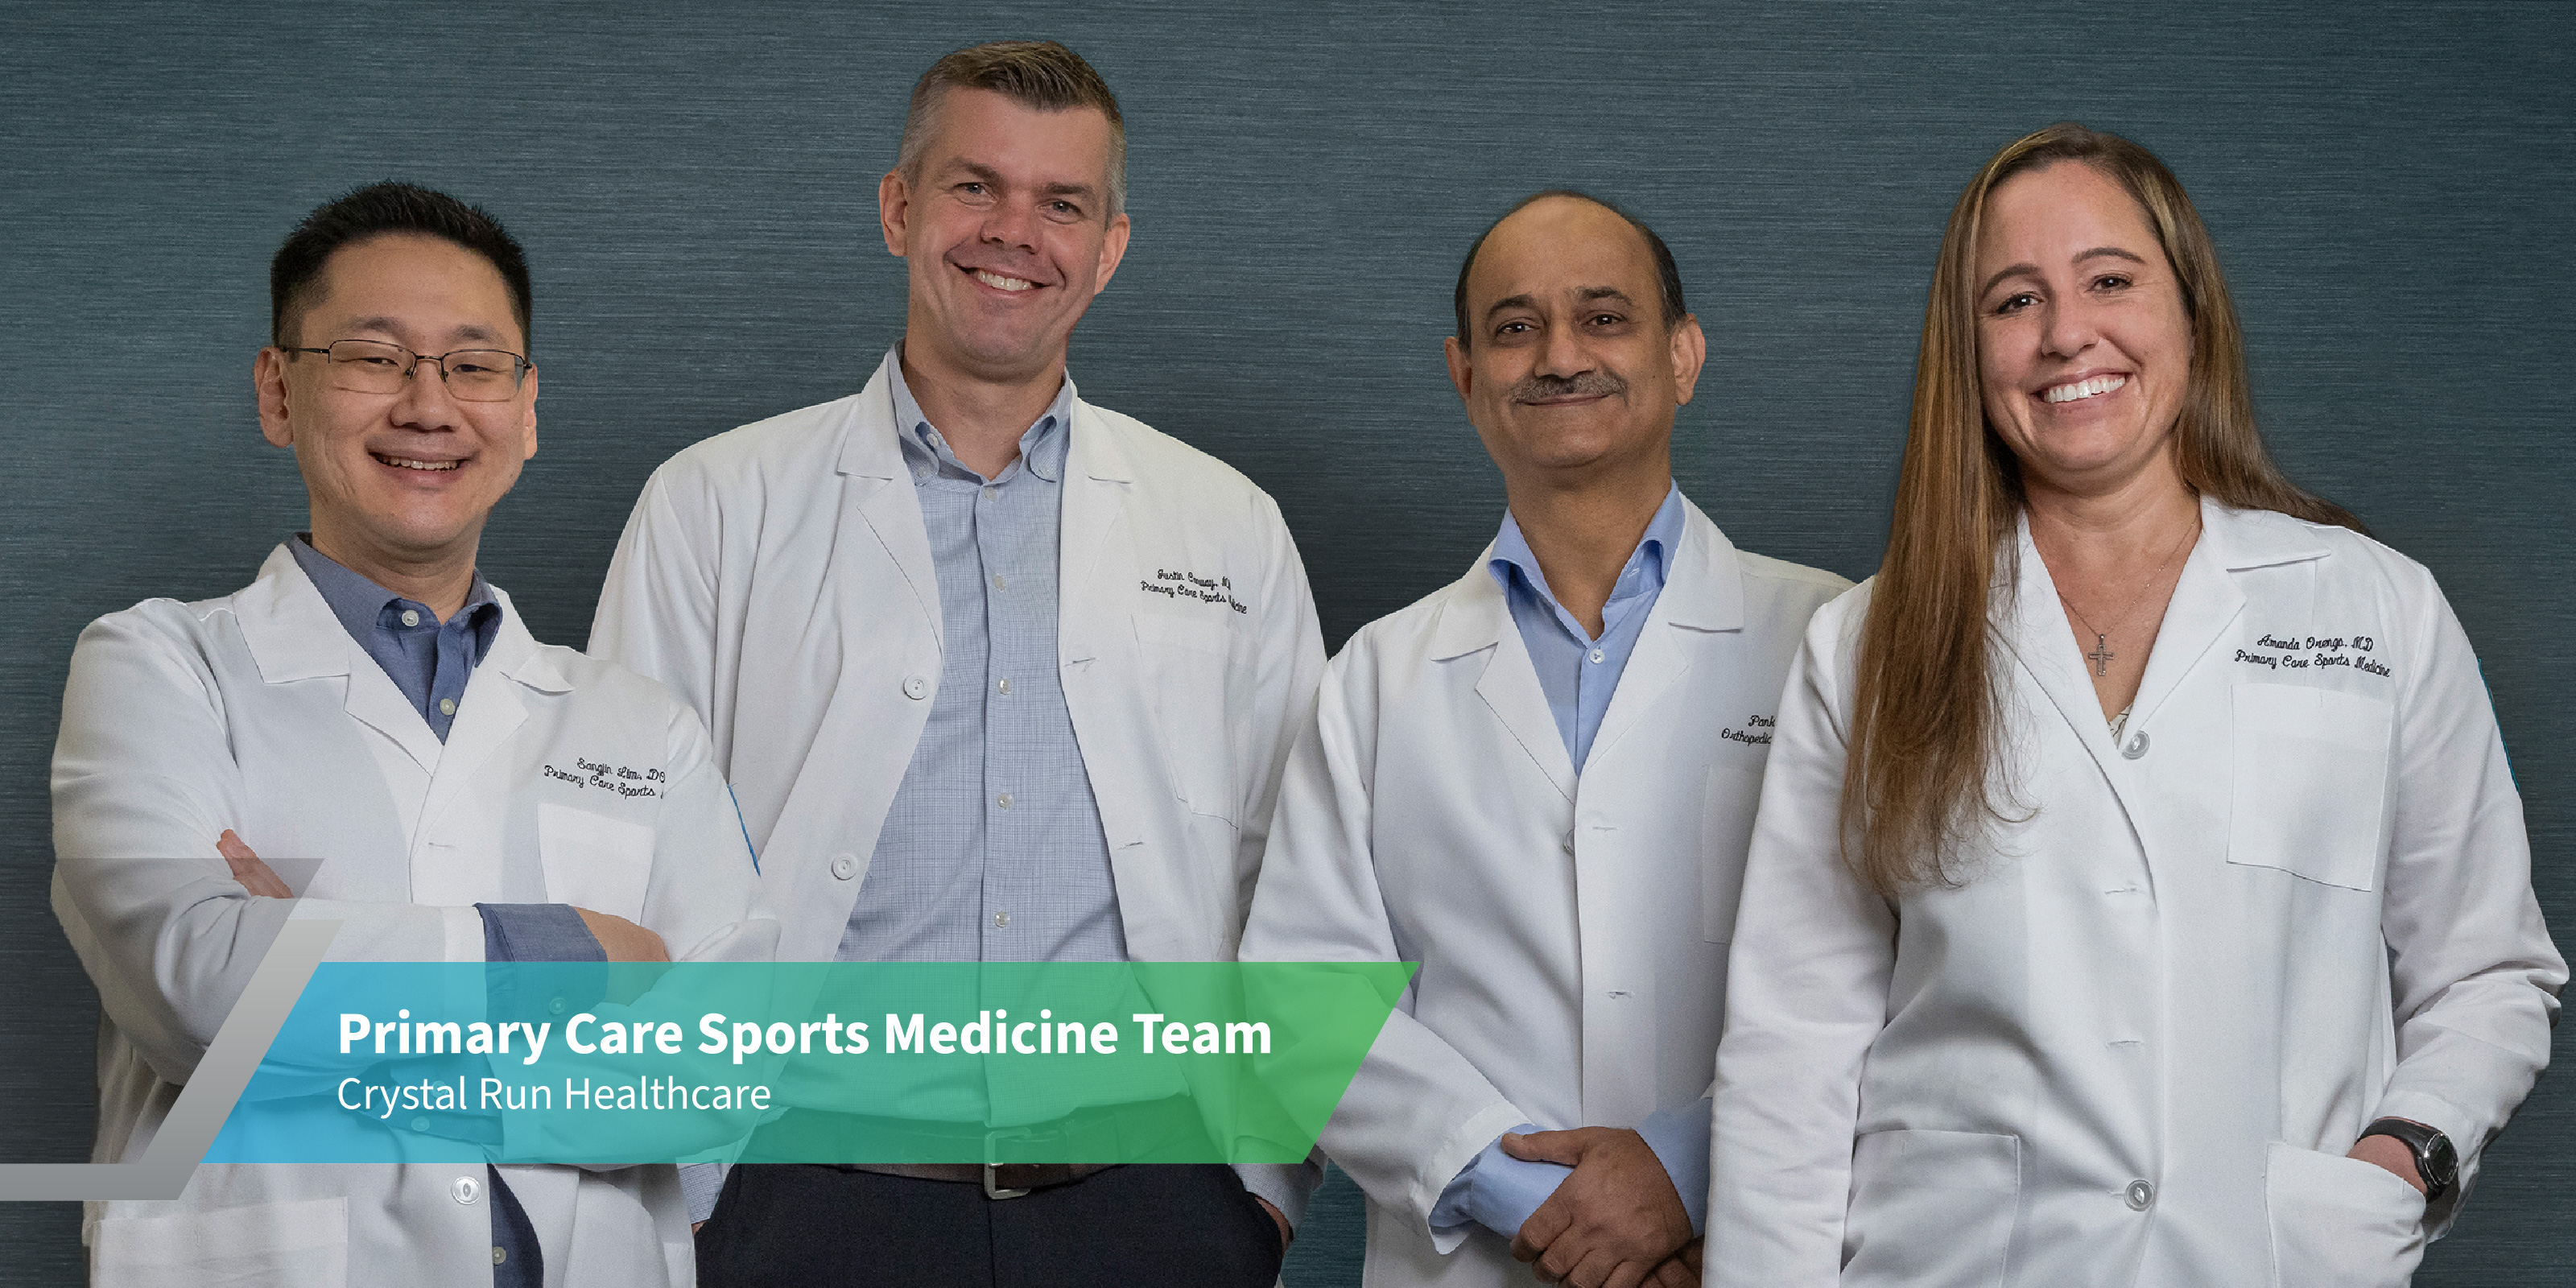 Sports Medicine Team